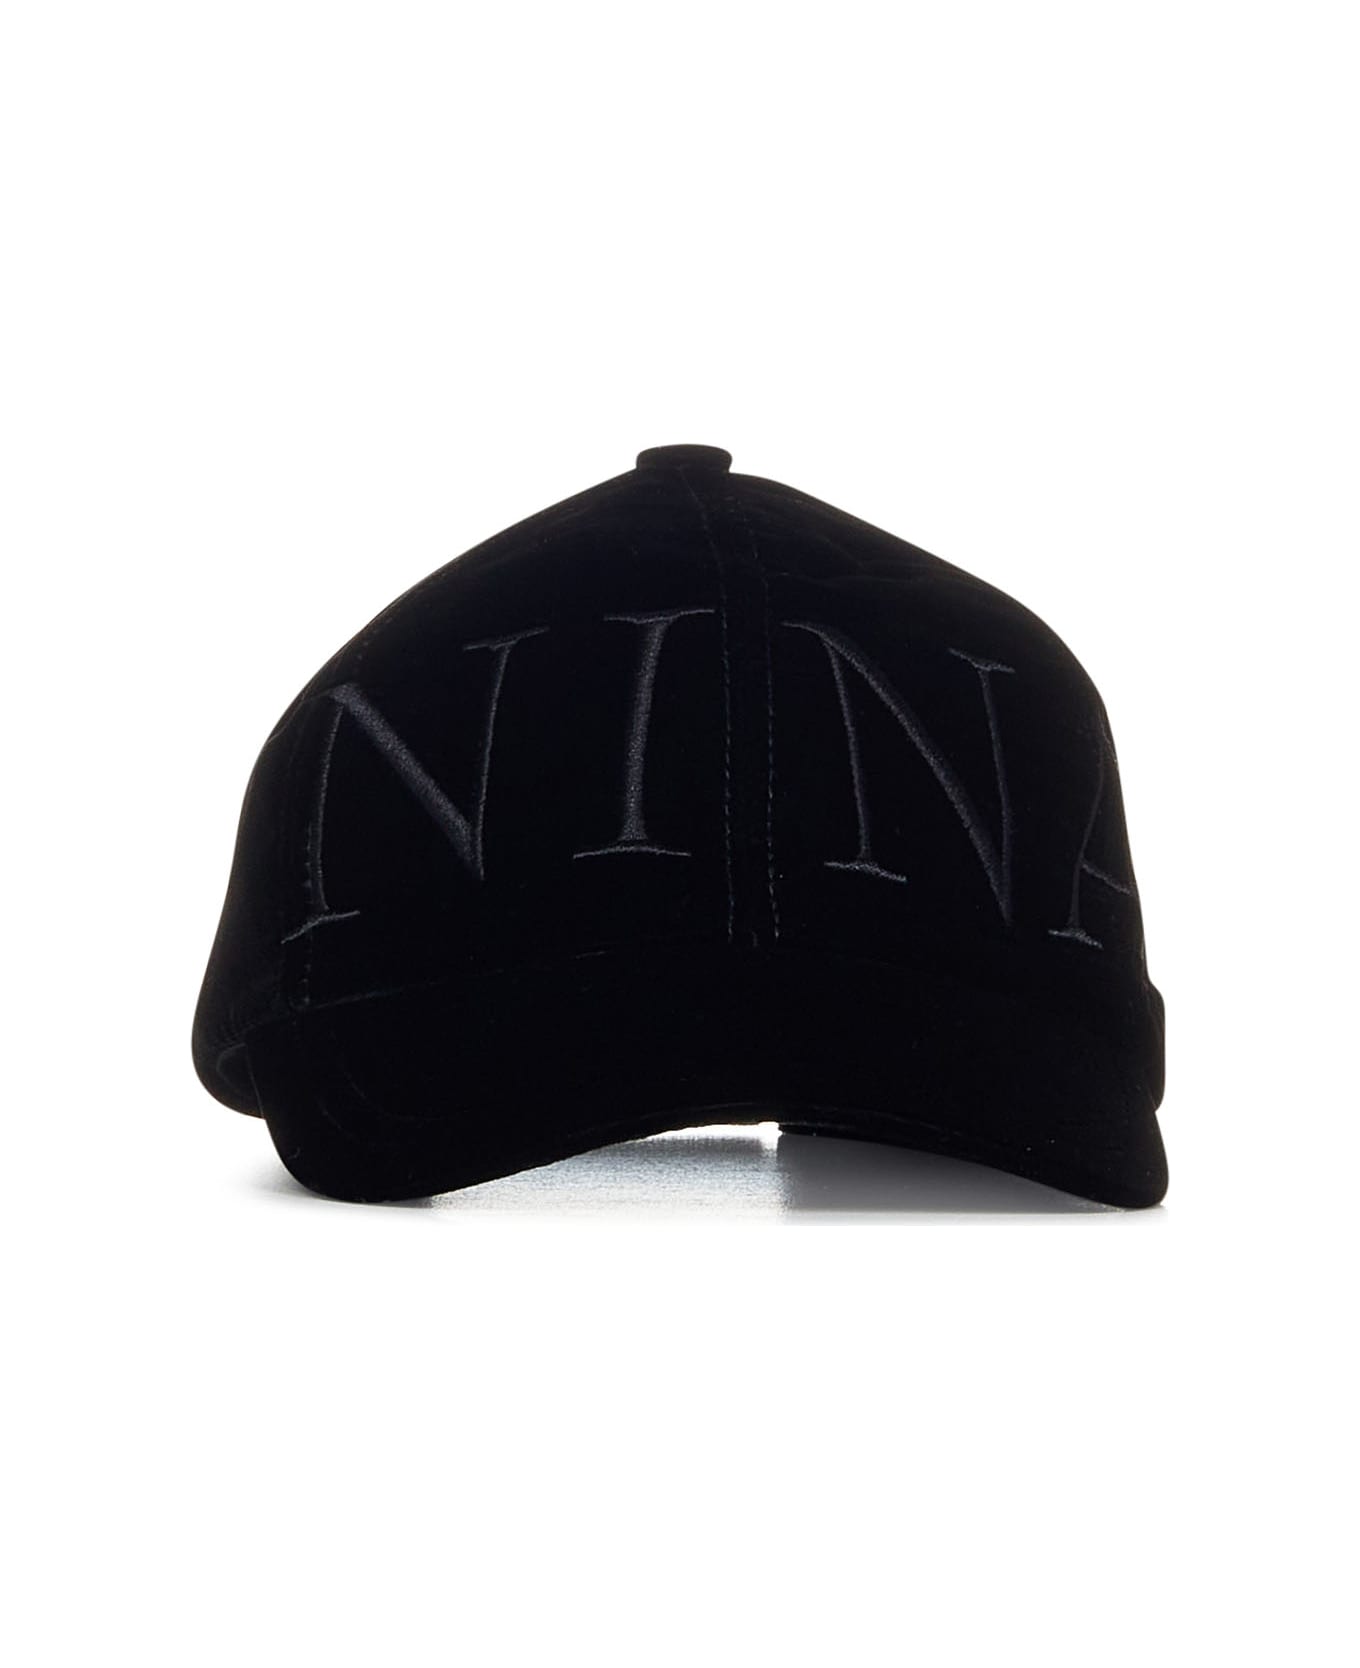 Nina Ricci Hat - NERO